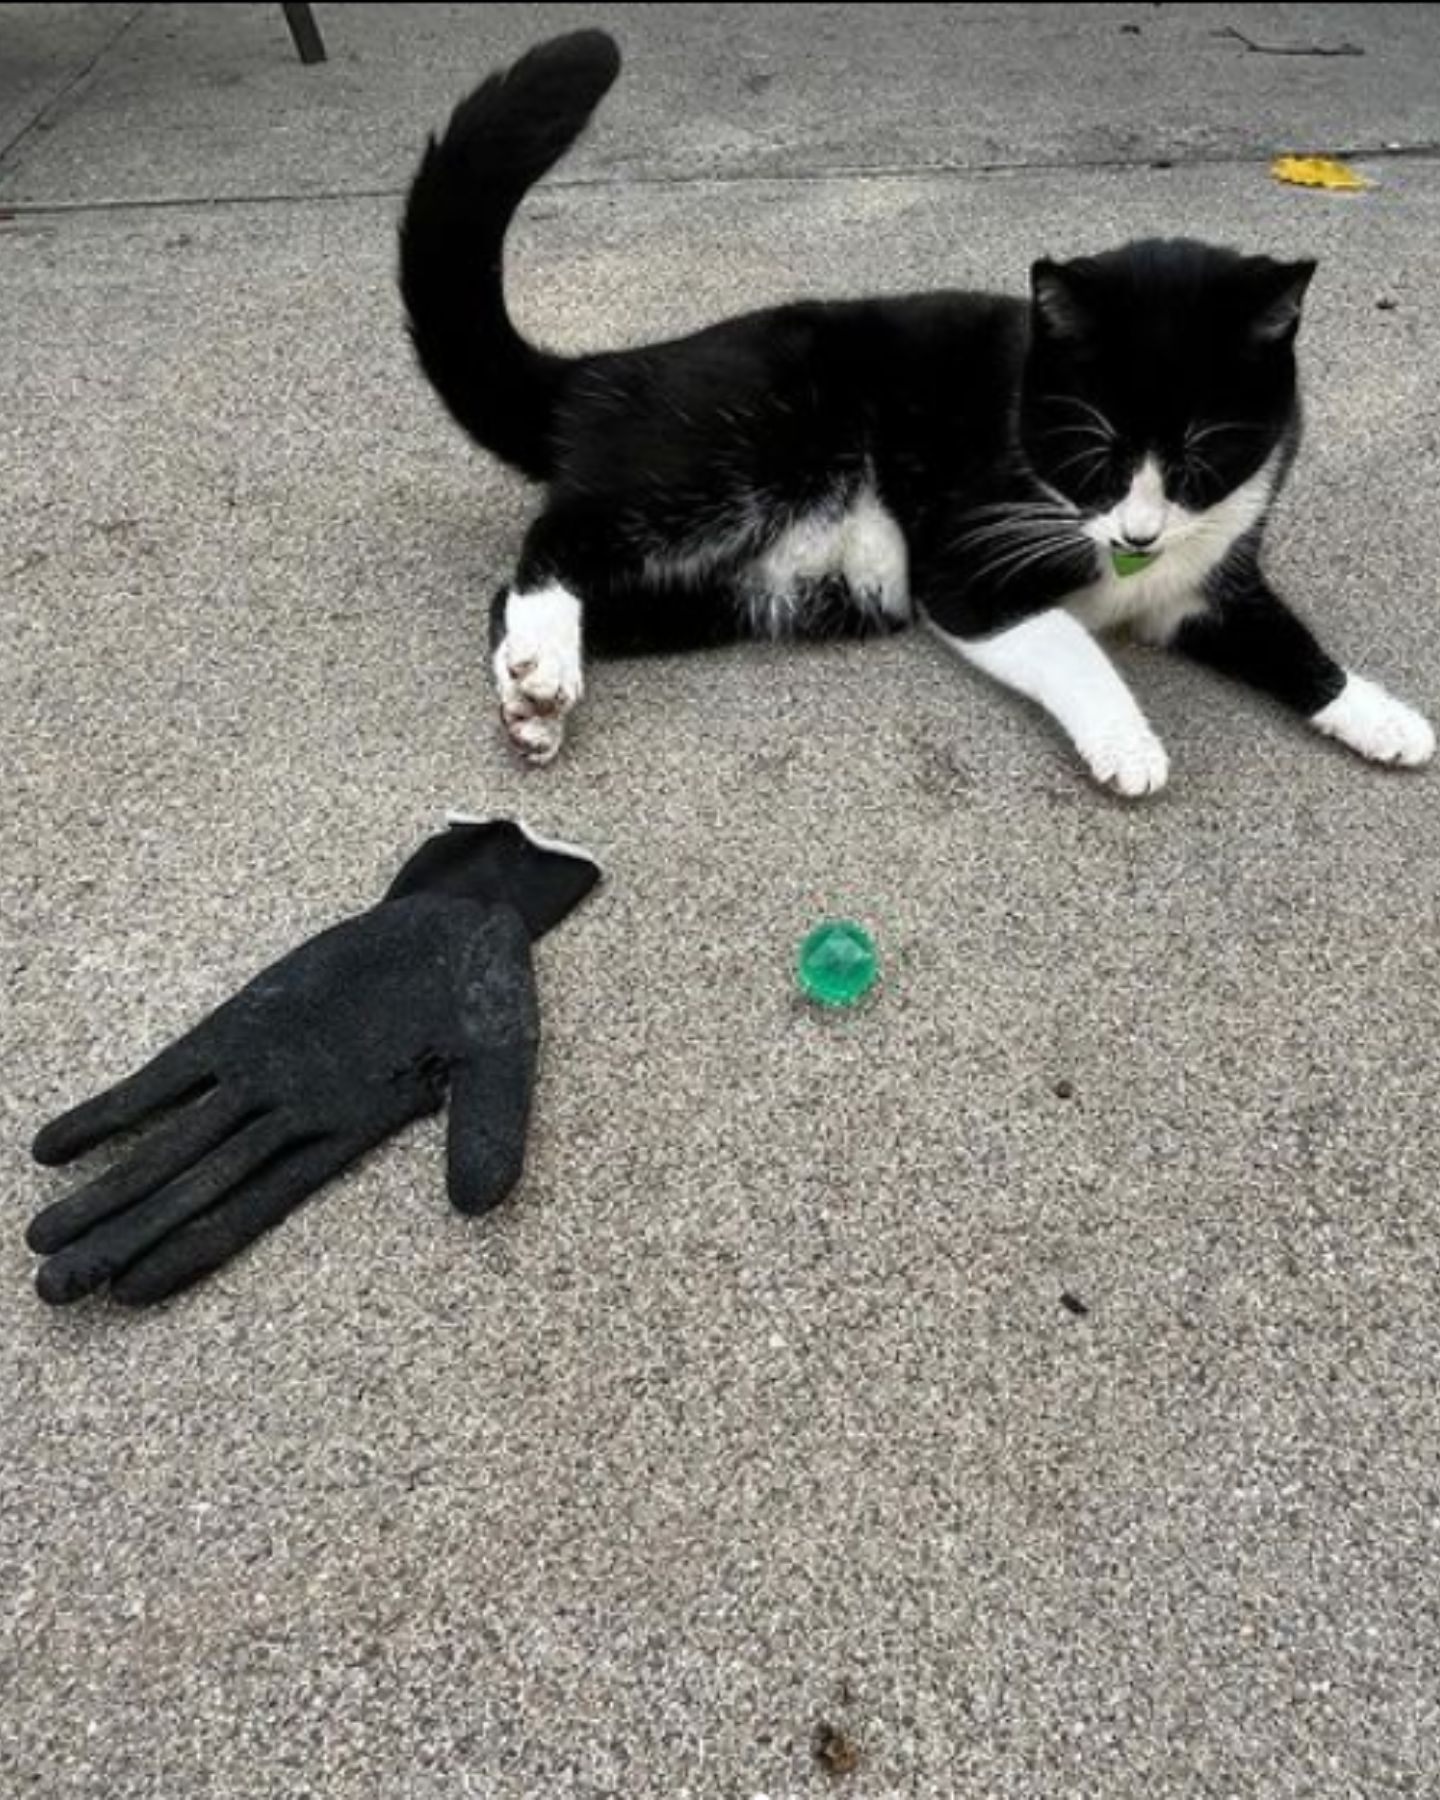 cat lying next to a black glove